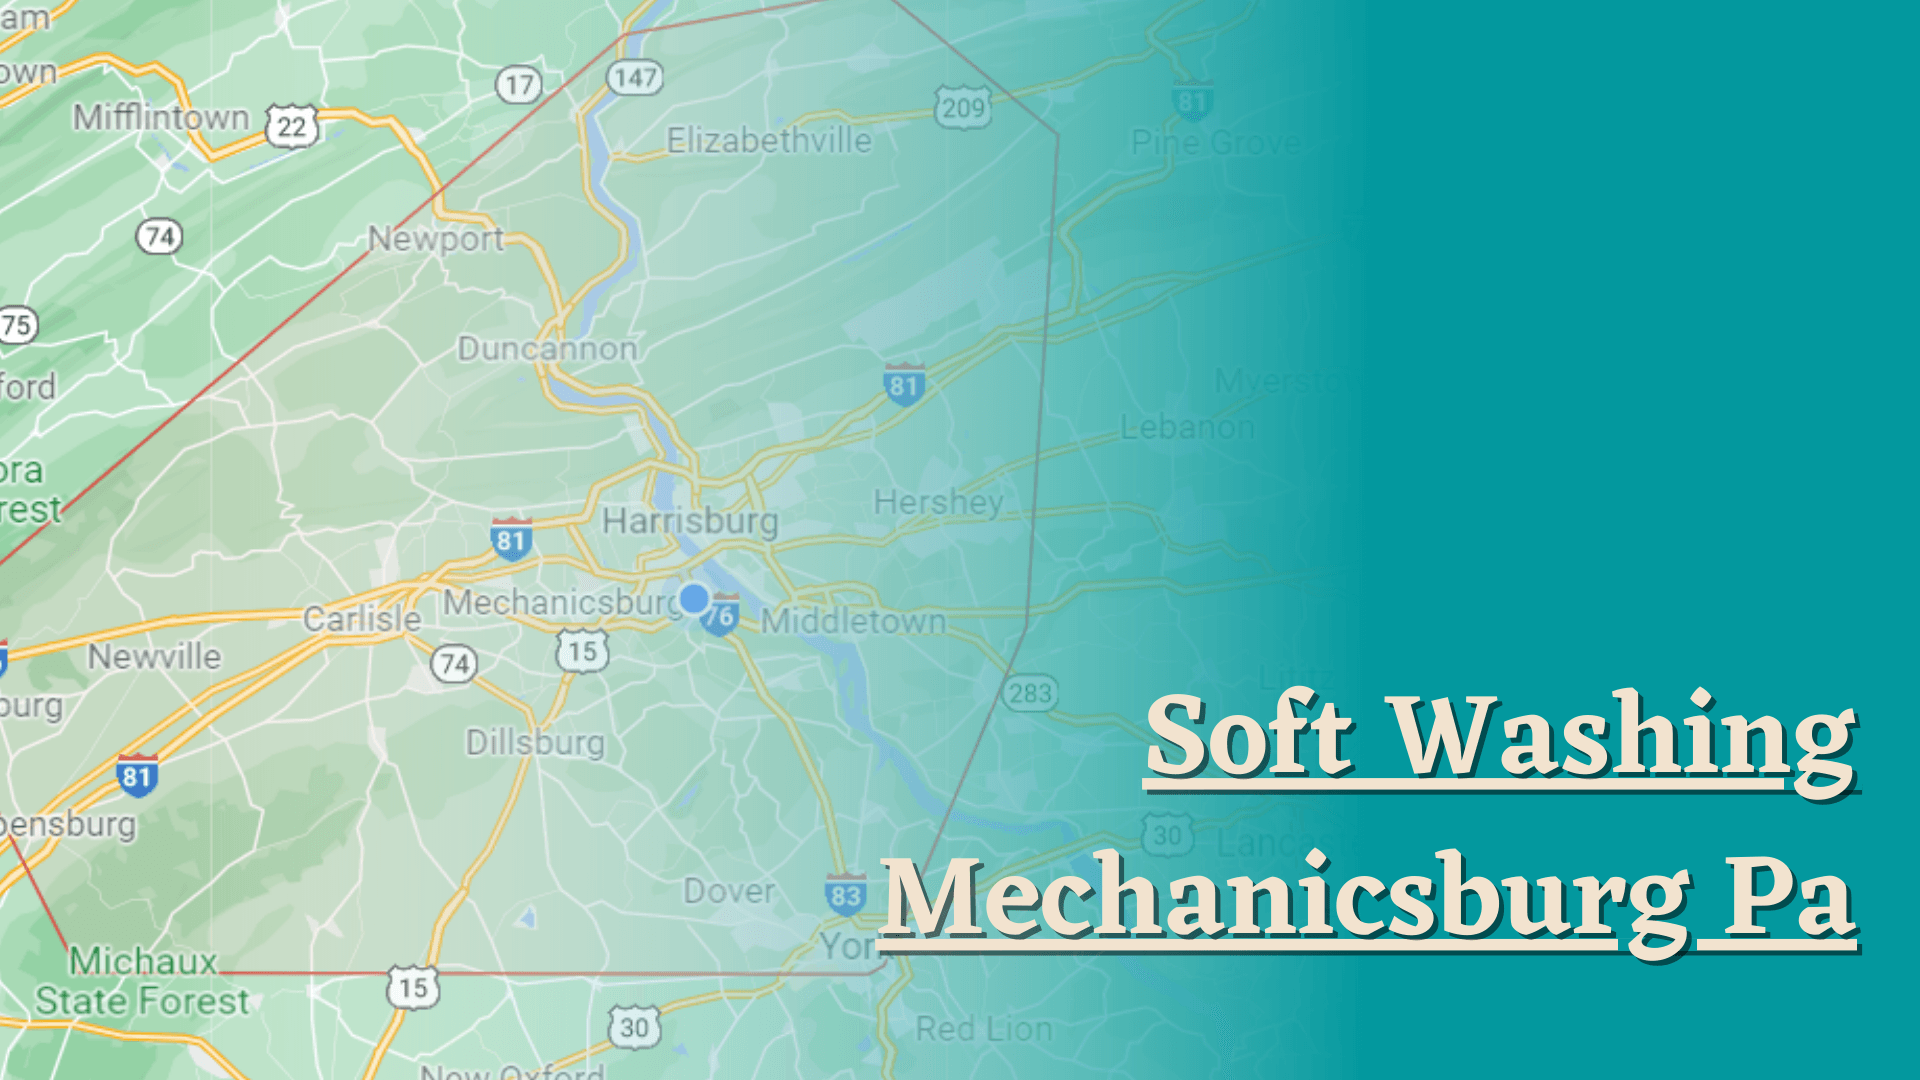 A map of soft washing in mechanicsburg pa